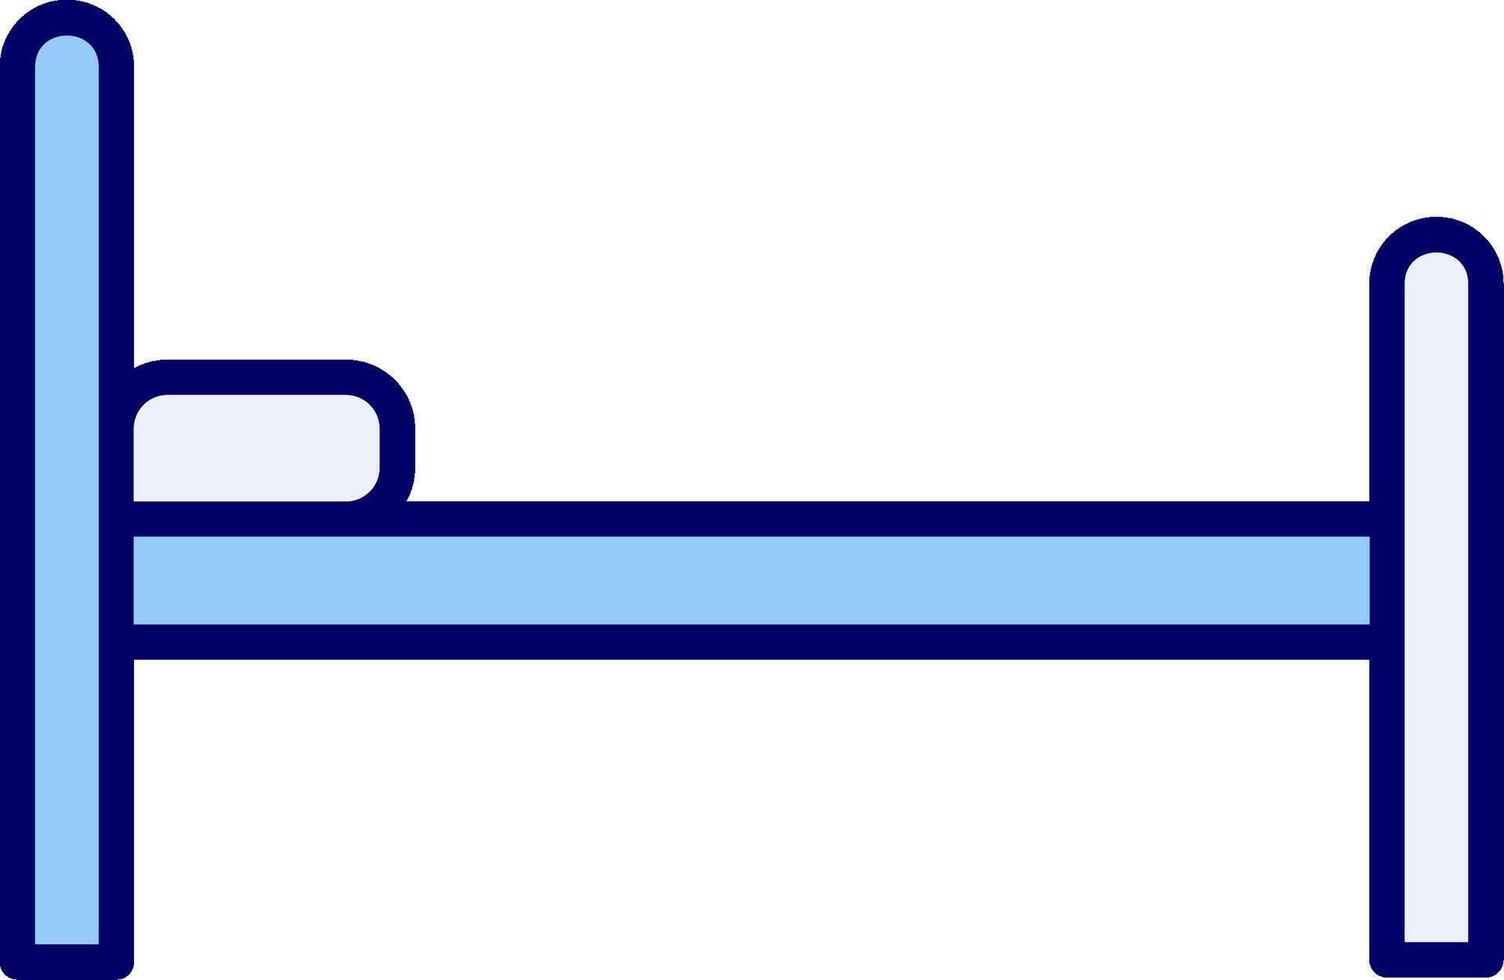 Vektorsymbol für Krankenhausbetten vektor